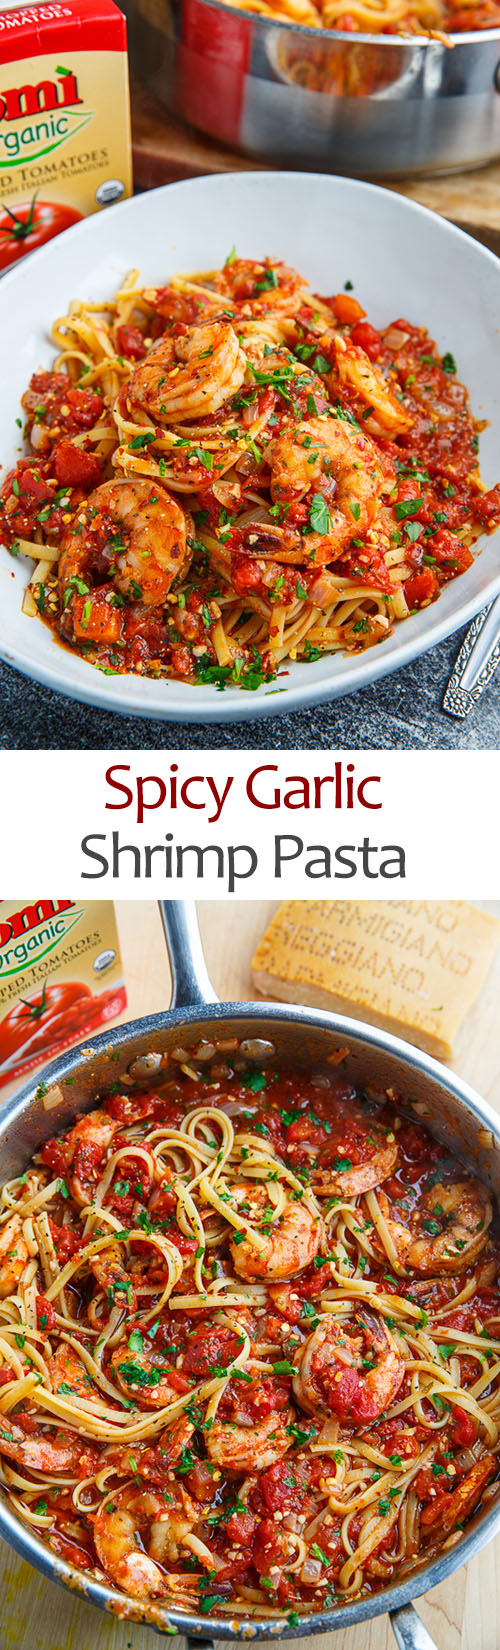 Spicy Garlic Shrimp Pasta